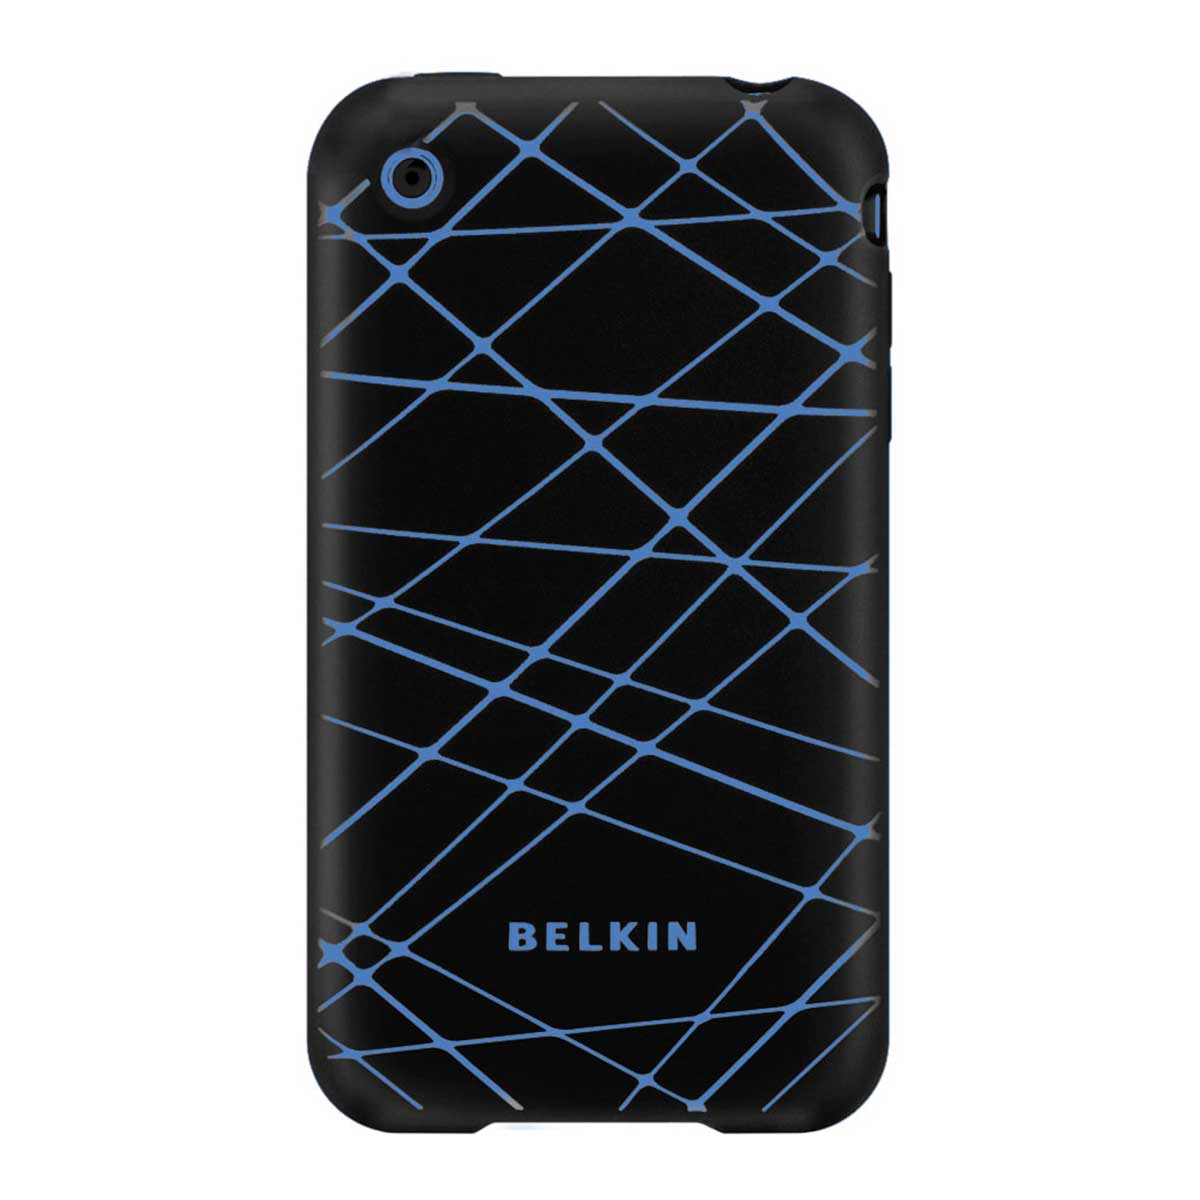 Capa para iPhone 3G - Belkin Grip Vector - Silicone Preto/Azul - F8Z474-BKB